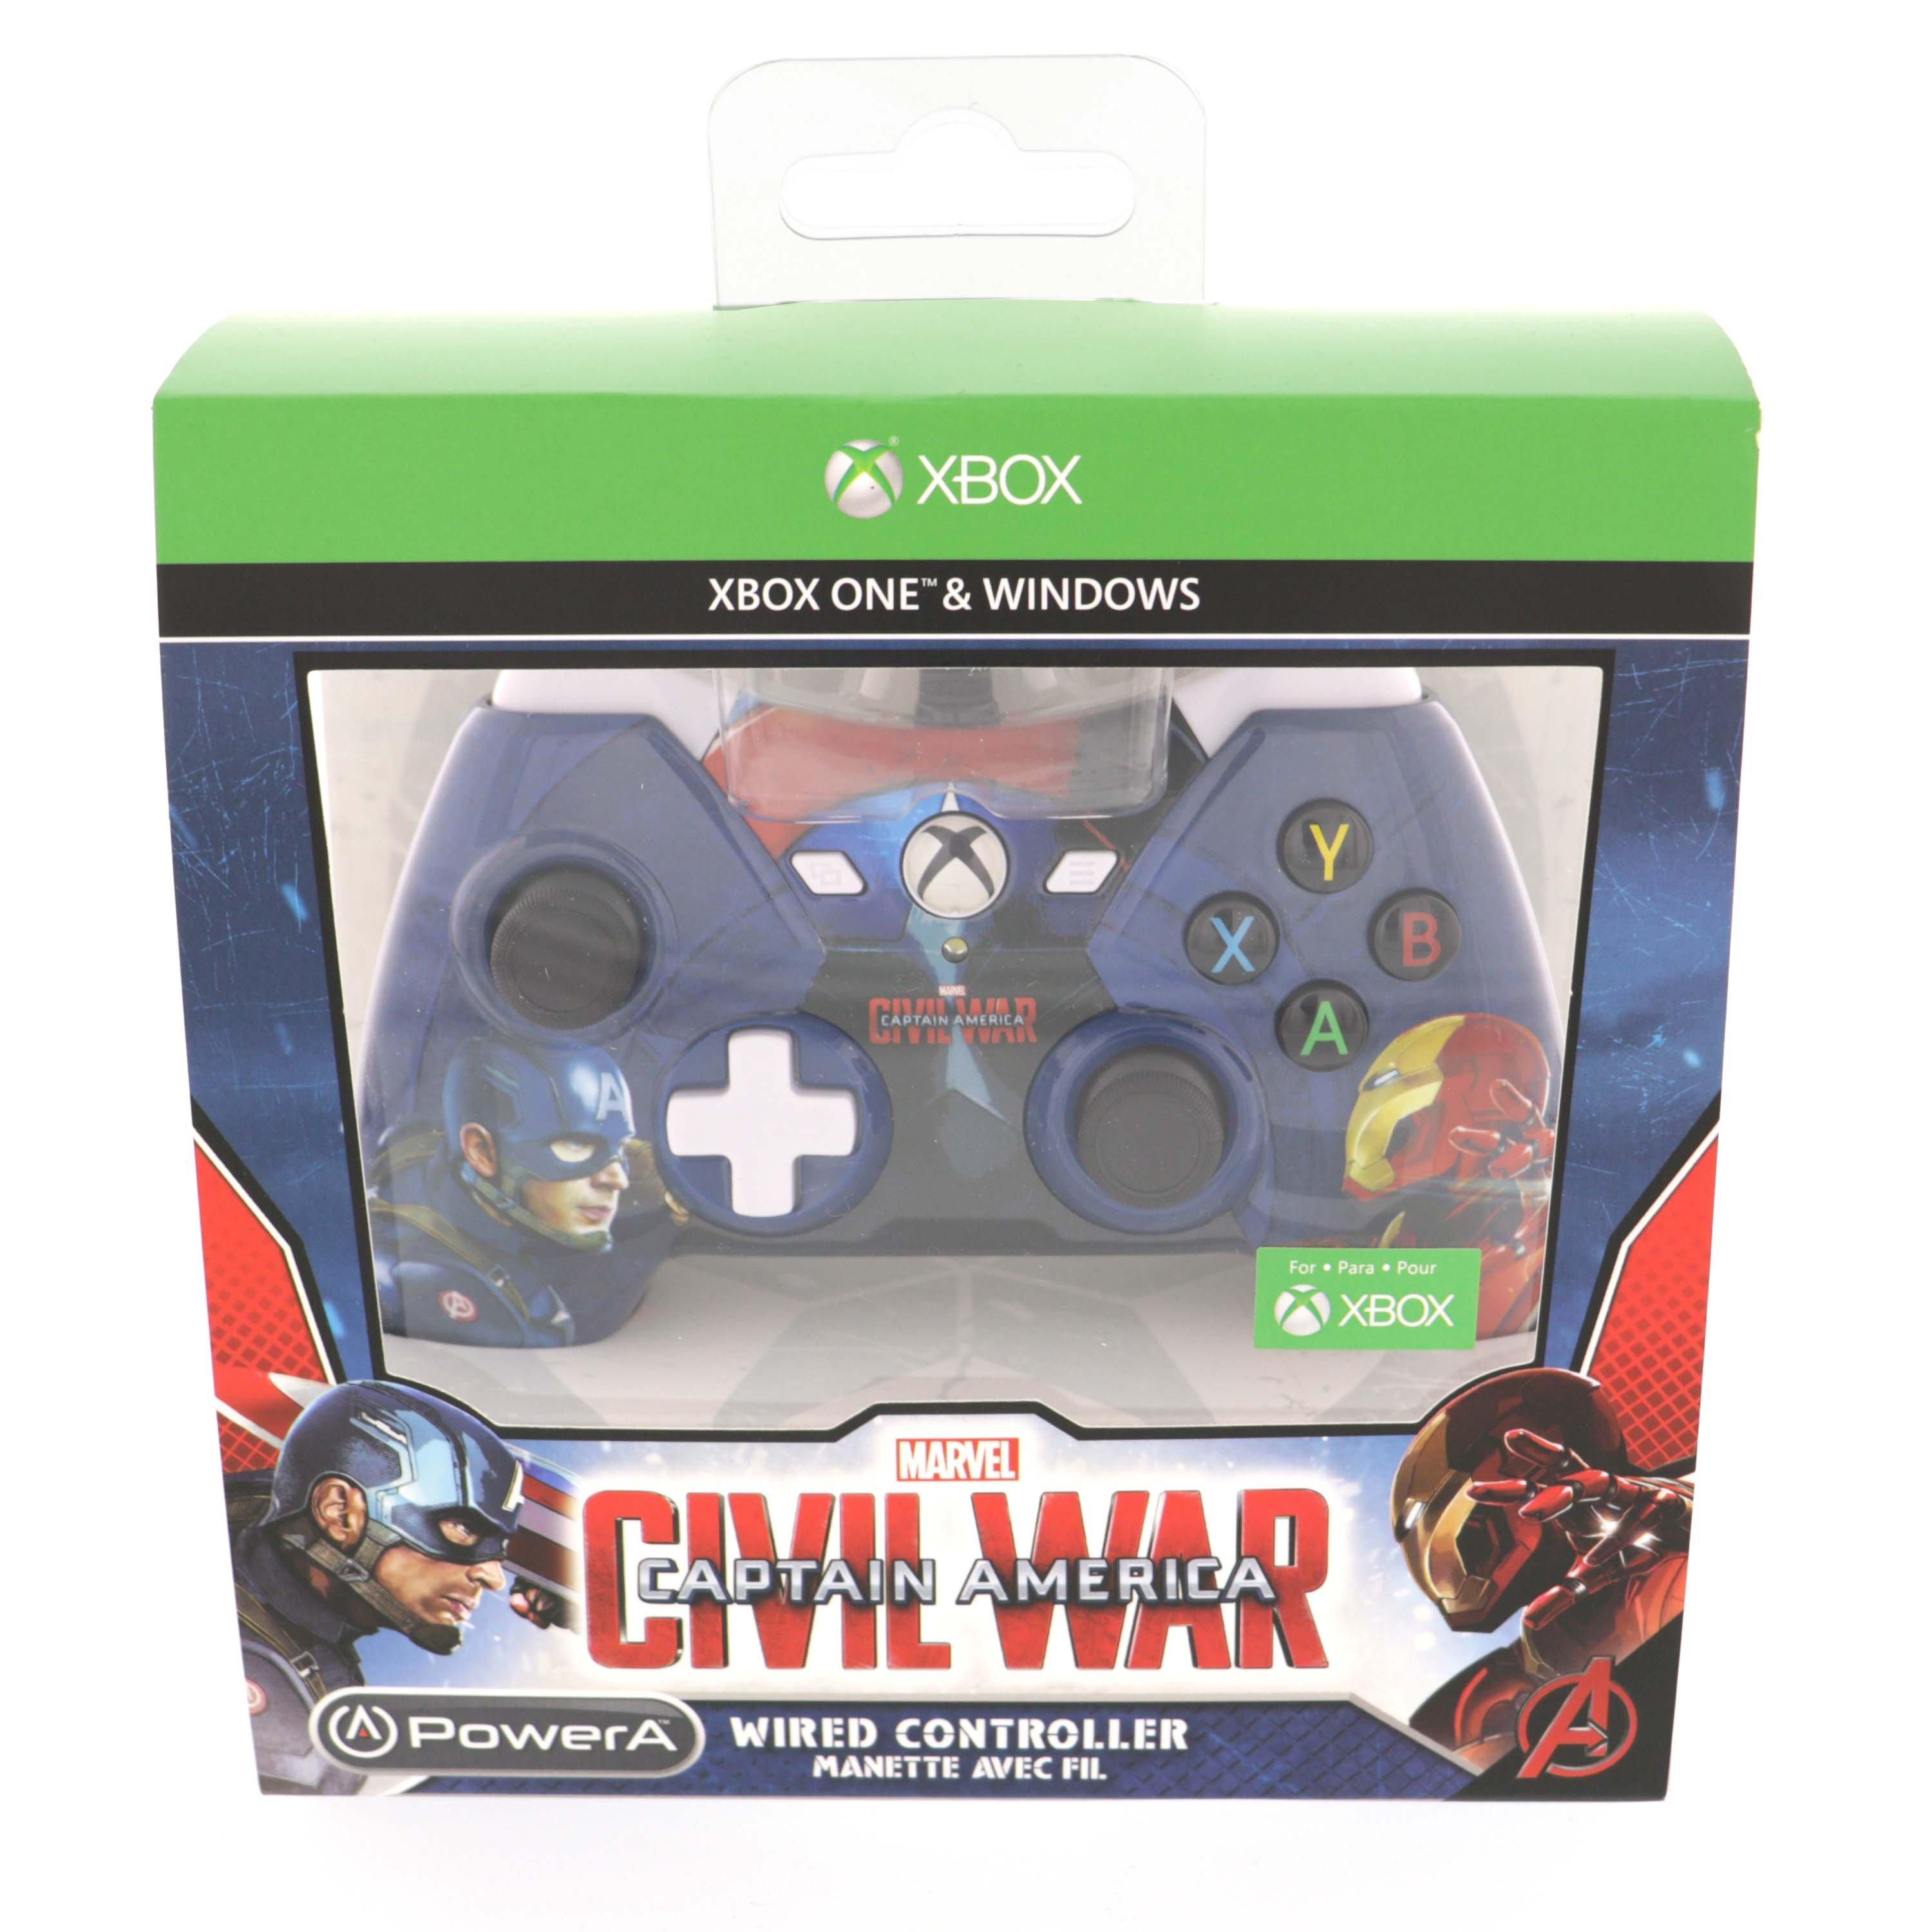 civil war xbox one